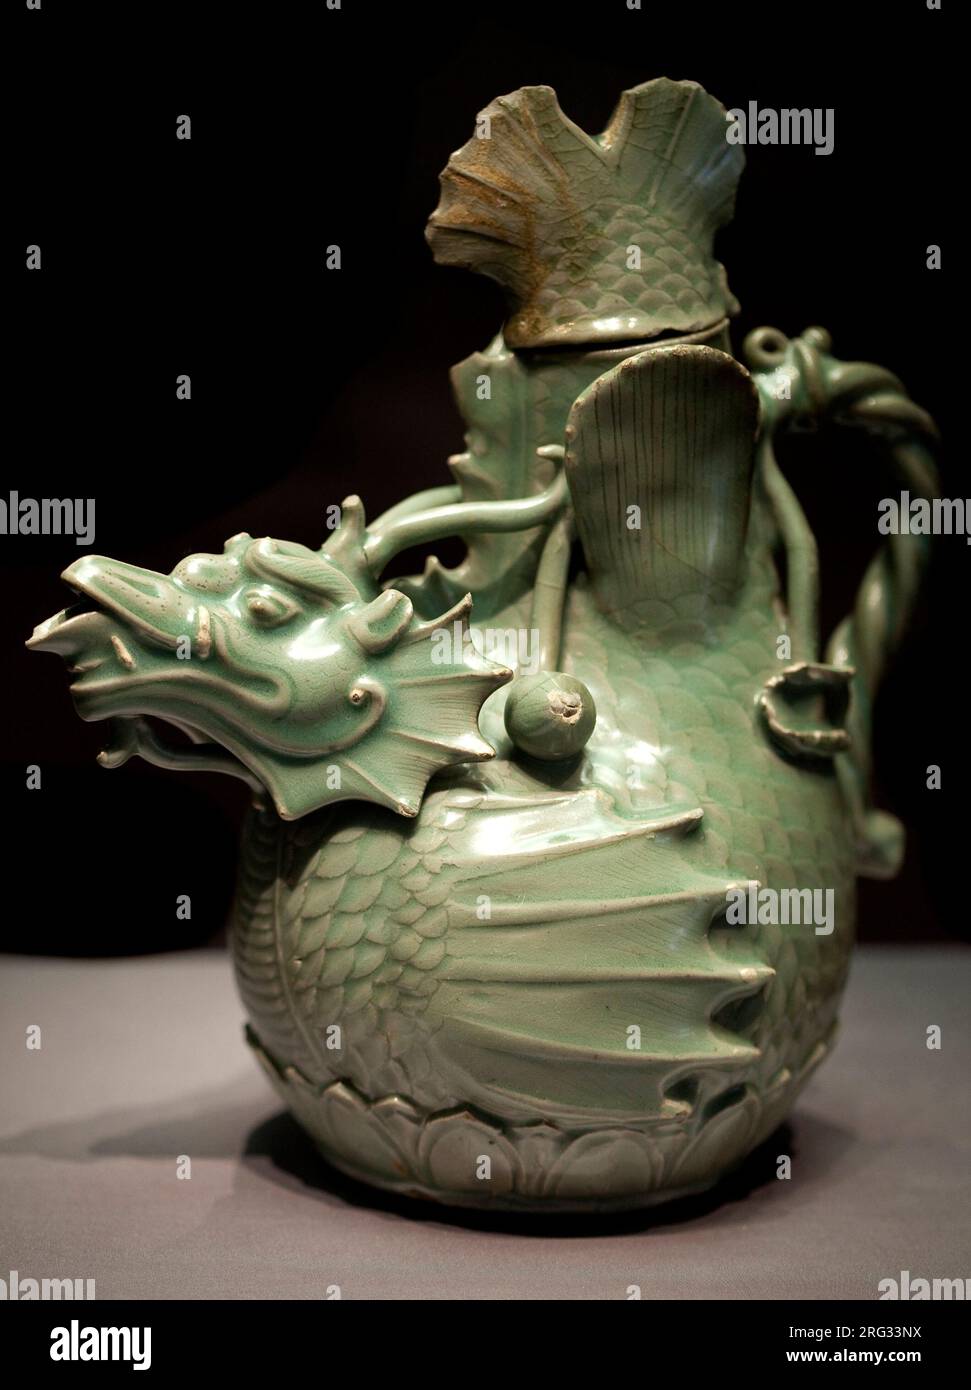 Pichet en forme de dragon aquatique. Celadon, 12e siecle, periode Goryeo (Koryo)(Coree). Tresor National numero 61. Musee National de Coree, Seoul (Coree du Sud). Stock Photo